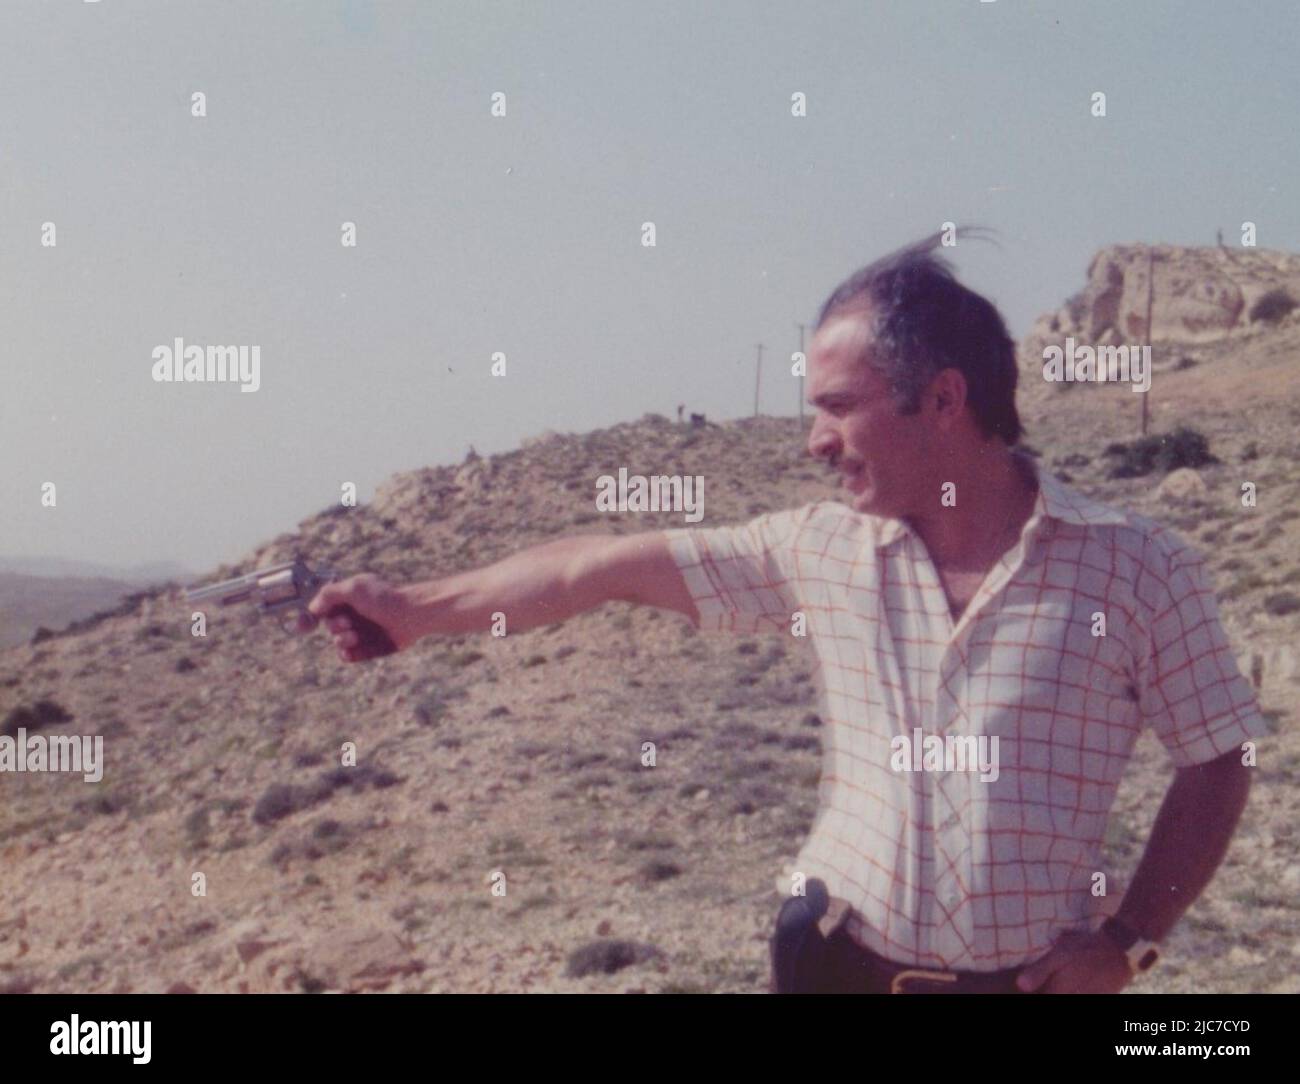 King Hussein Of Jordan Shooting In The Desert, 1974 Stock Photo